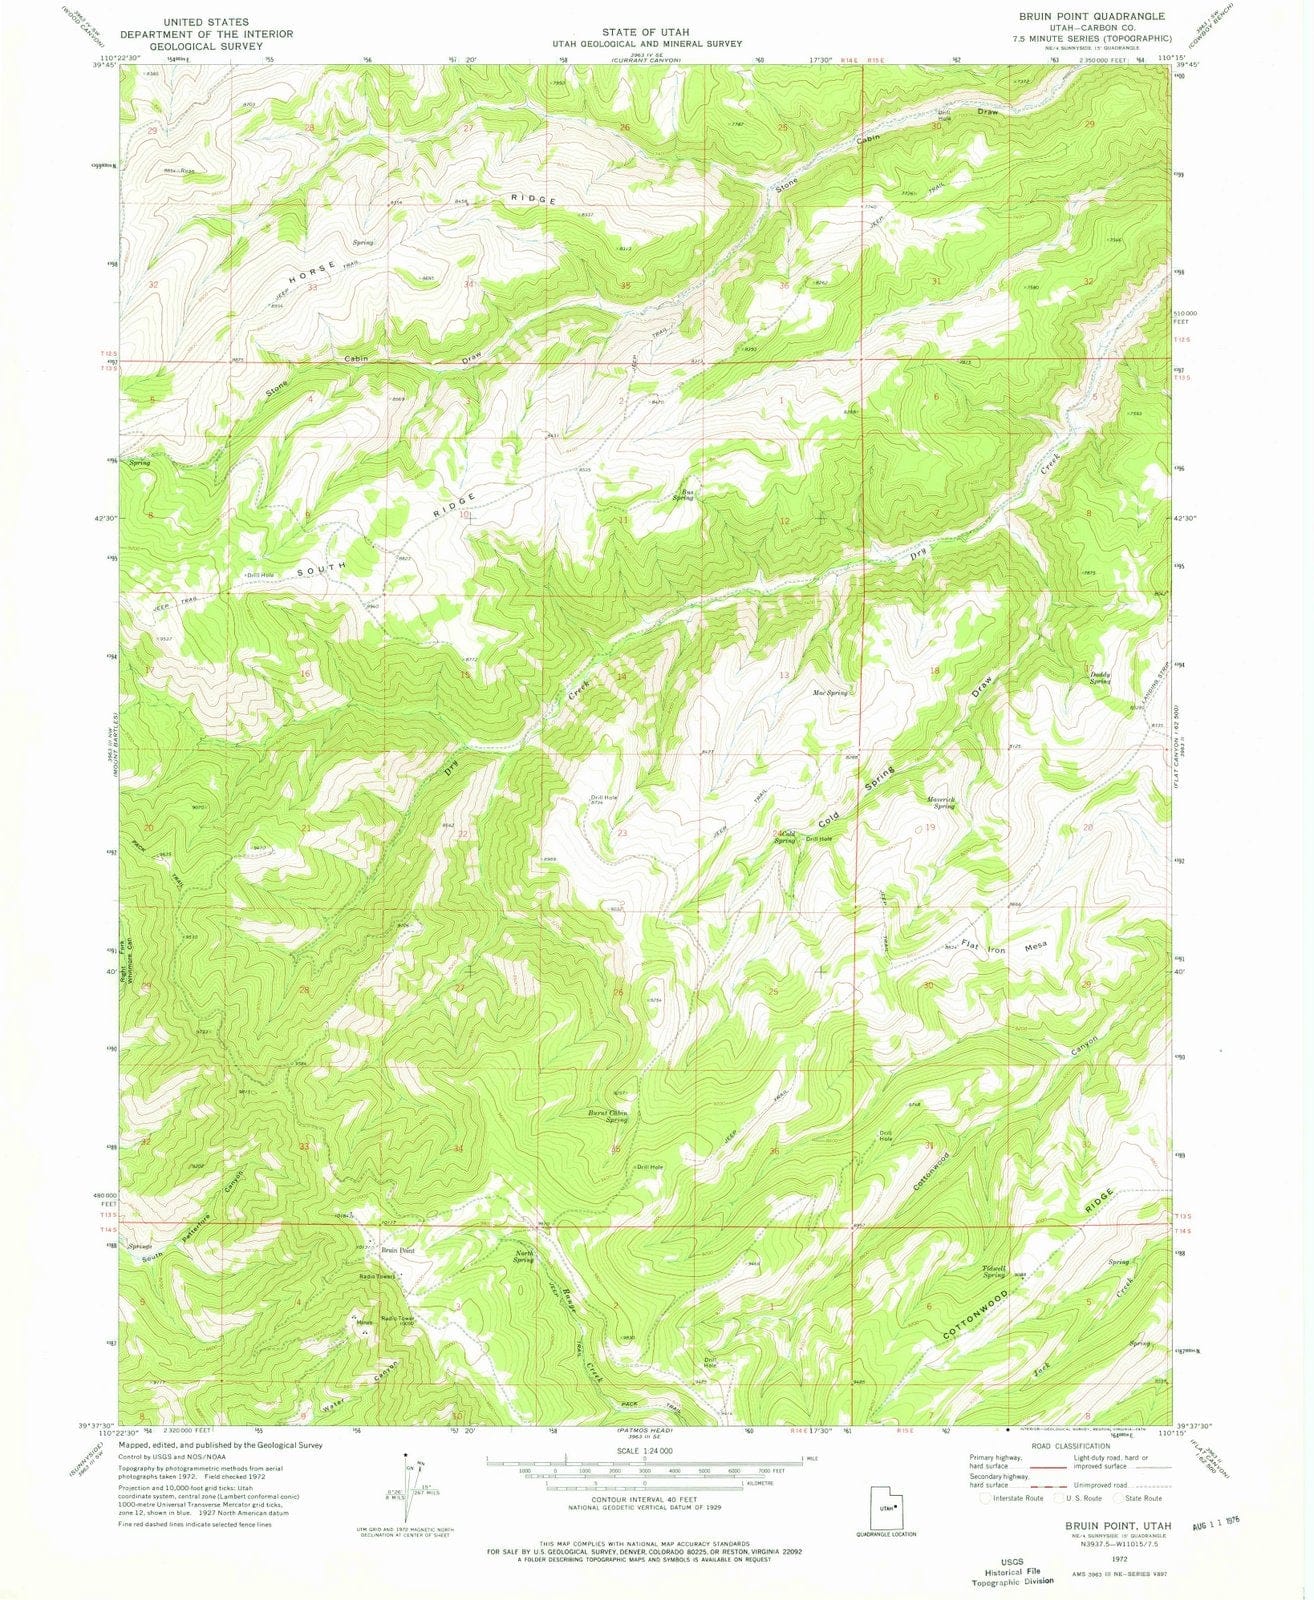 1972 Bruin Point, UT - Utah - USGS Topographic Map